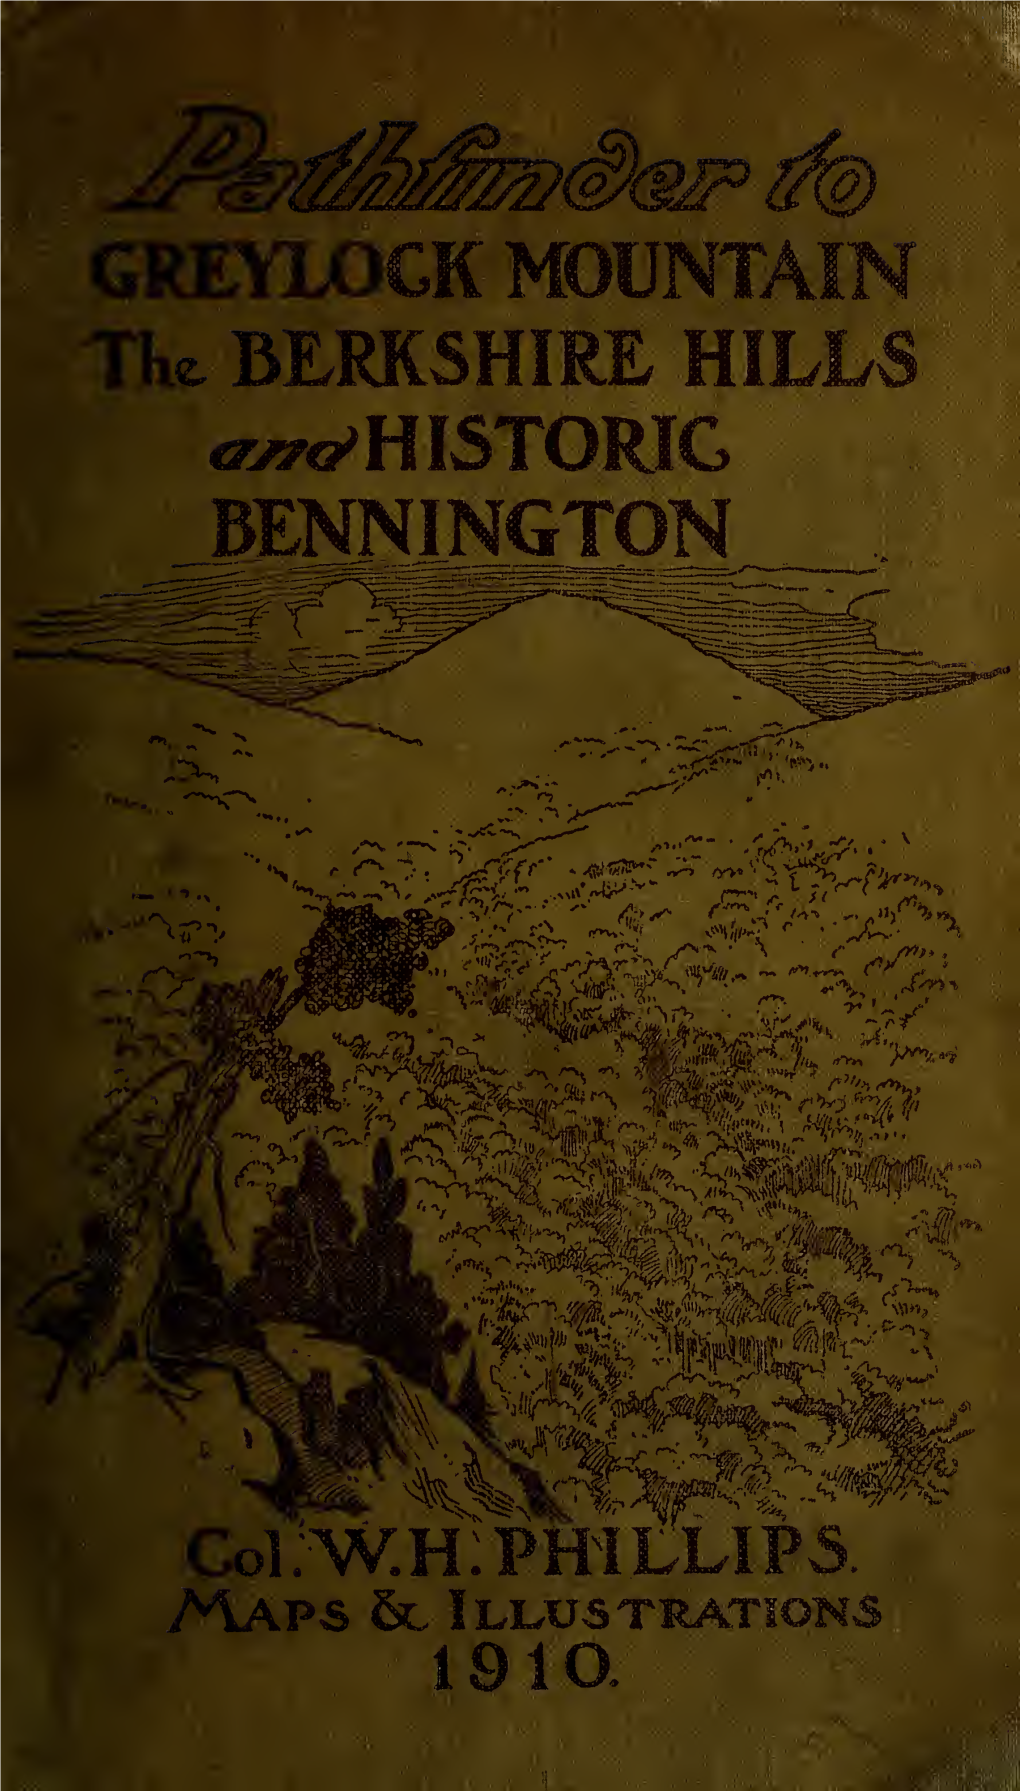 Pathfinder to Greylock Mountain, the Berkshire Hills and Historic Bennington... Maps Showing Roads, Street Railways and Greylock